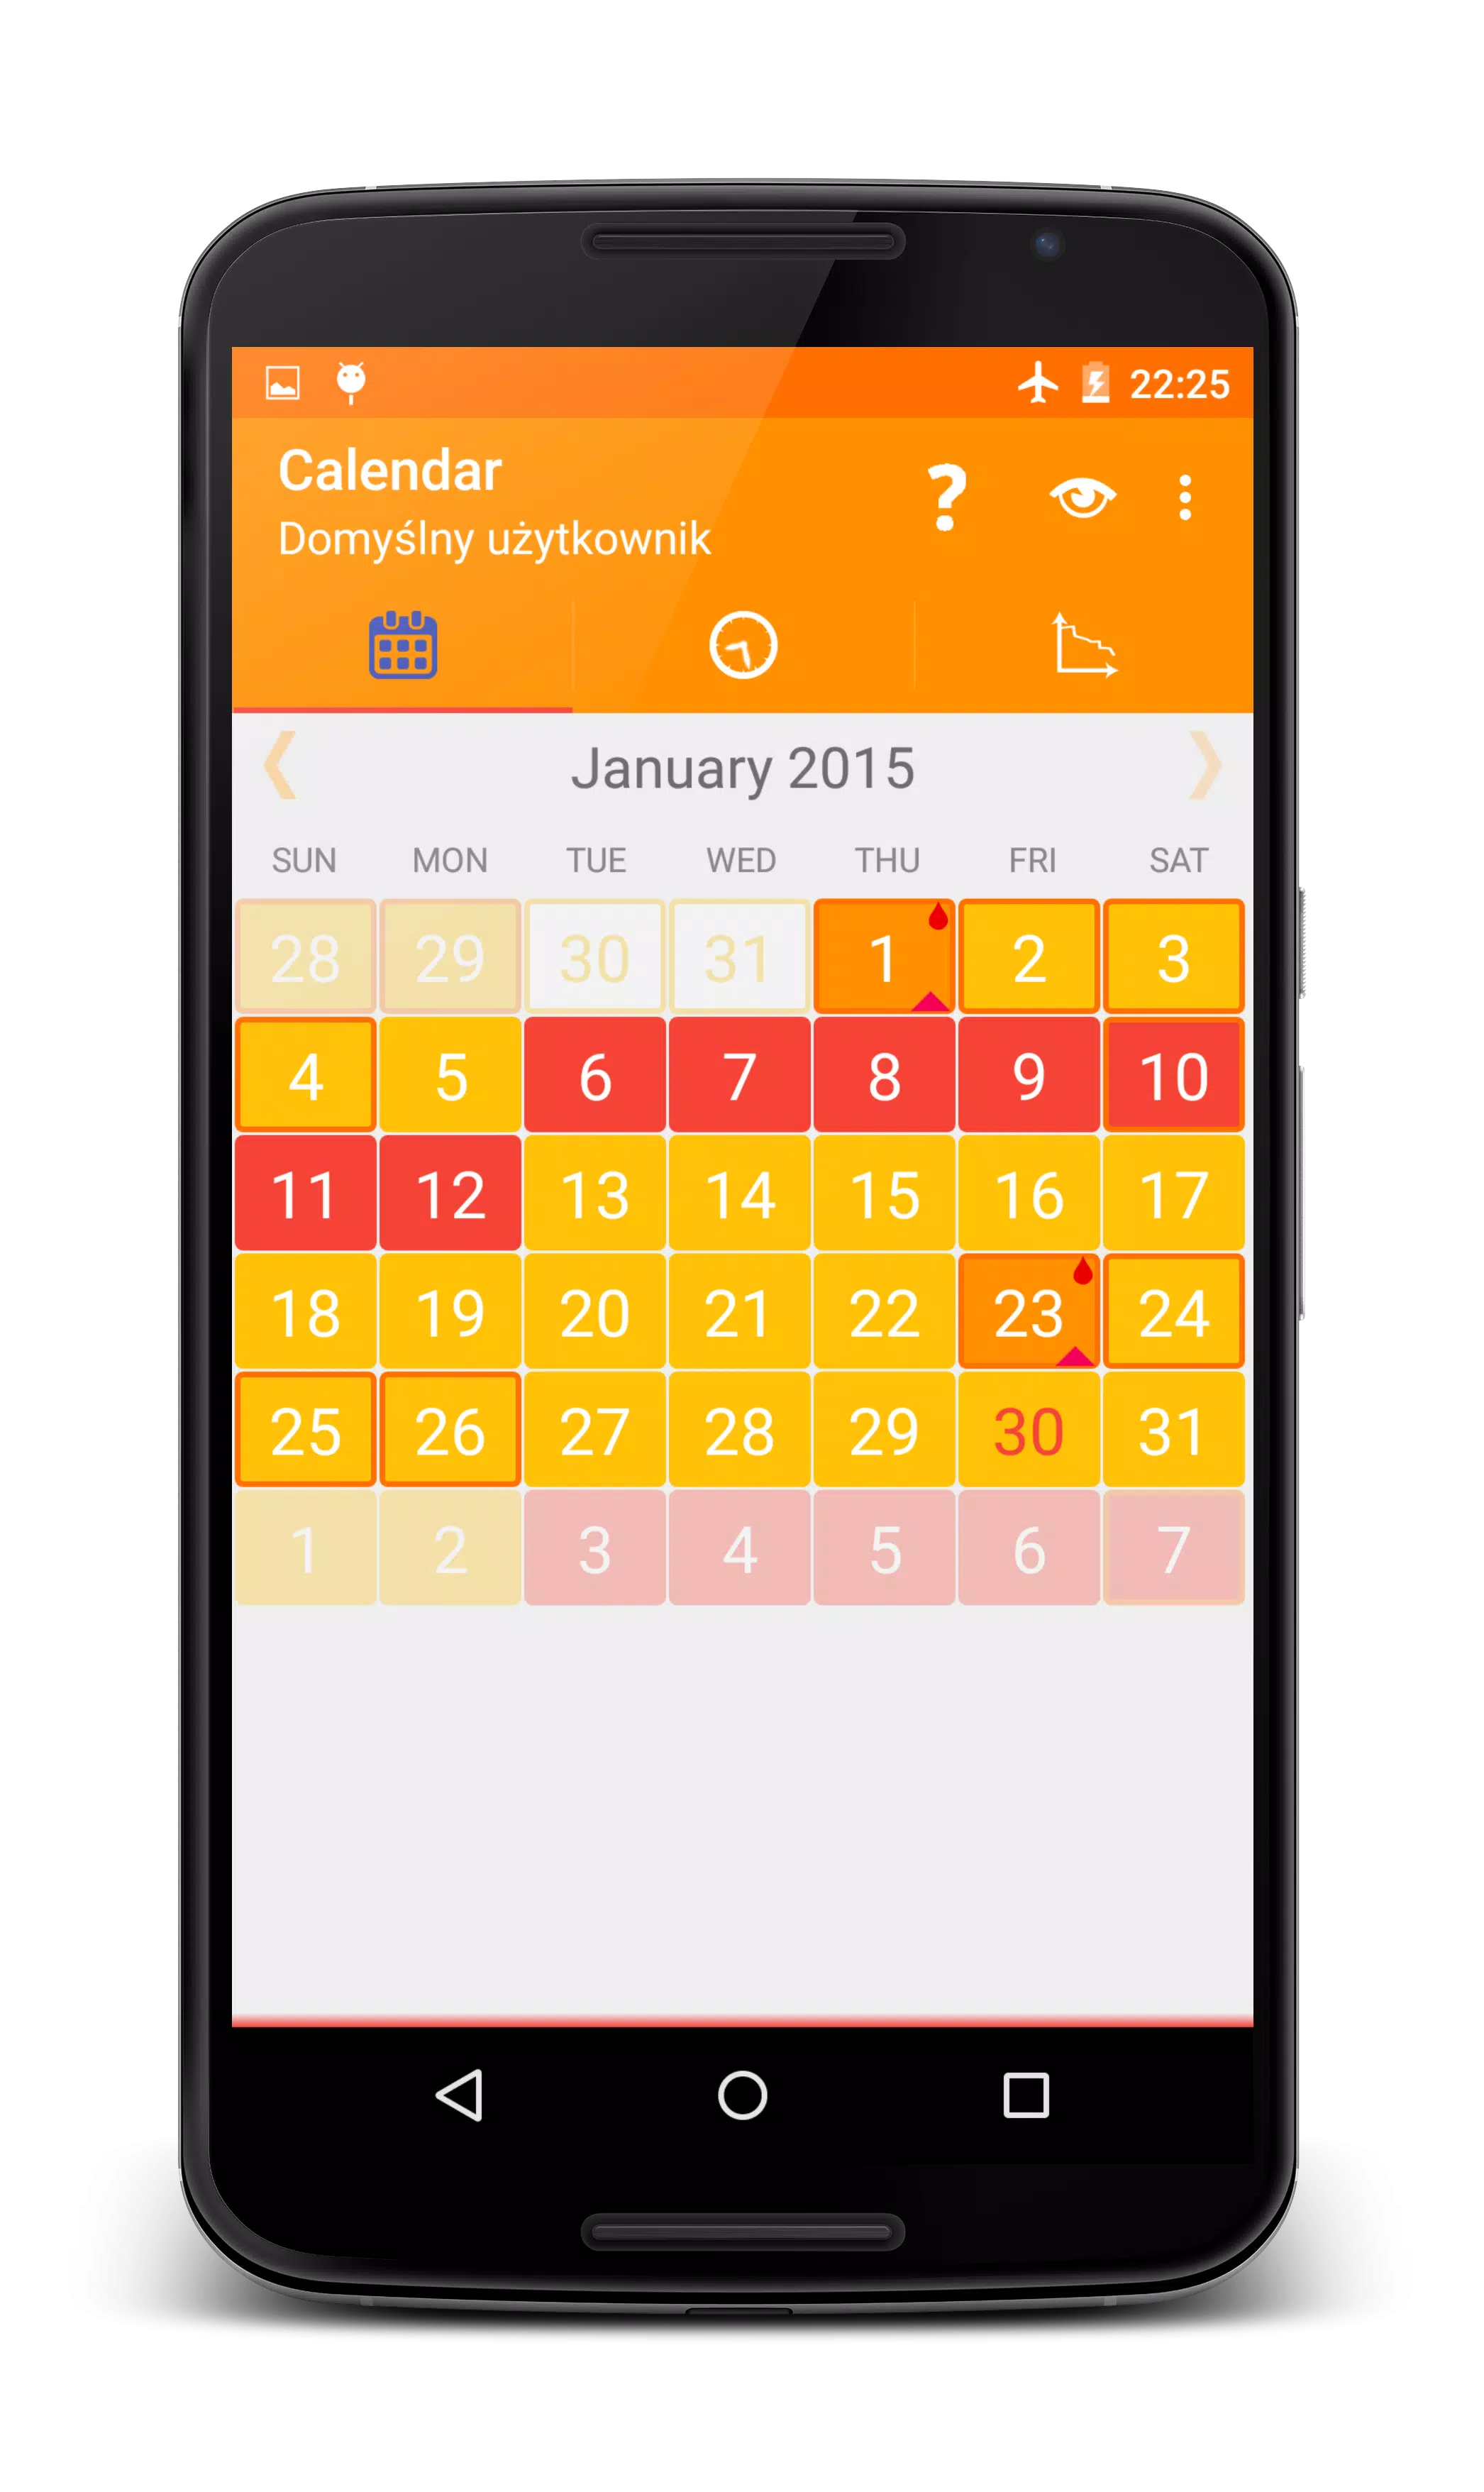 Calendario de Fertilidad for Android - APK Download